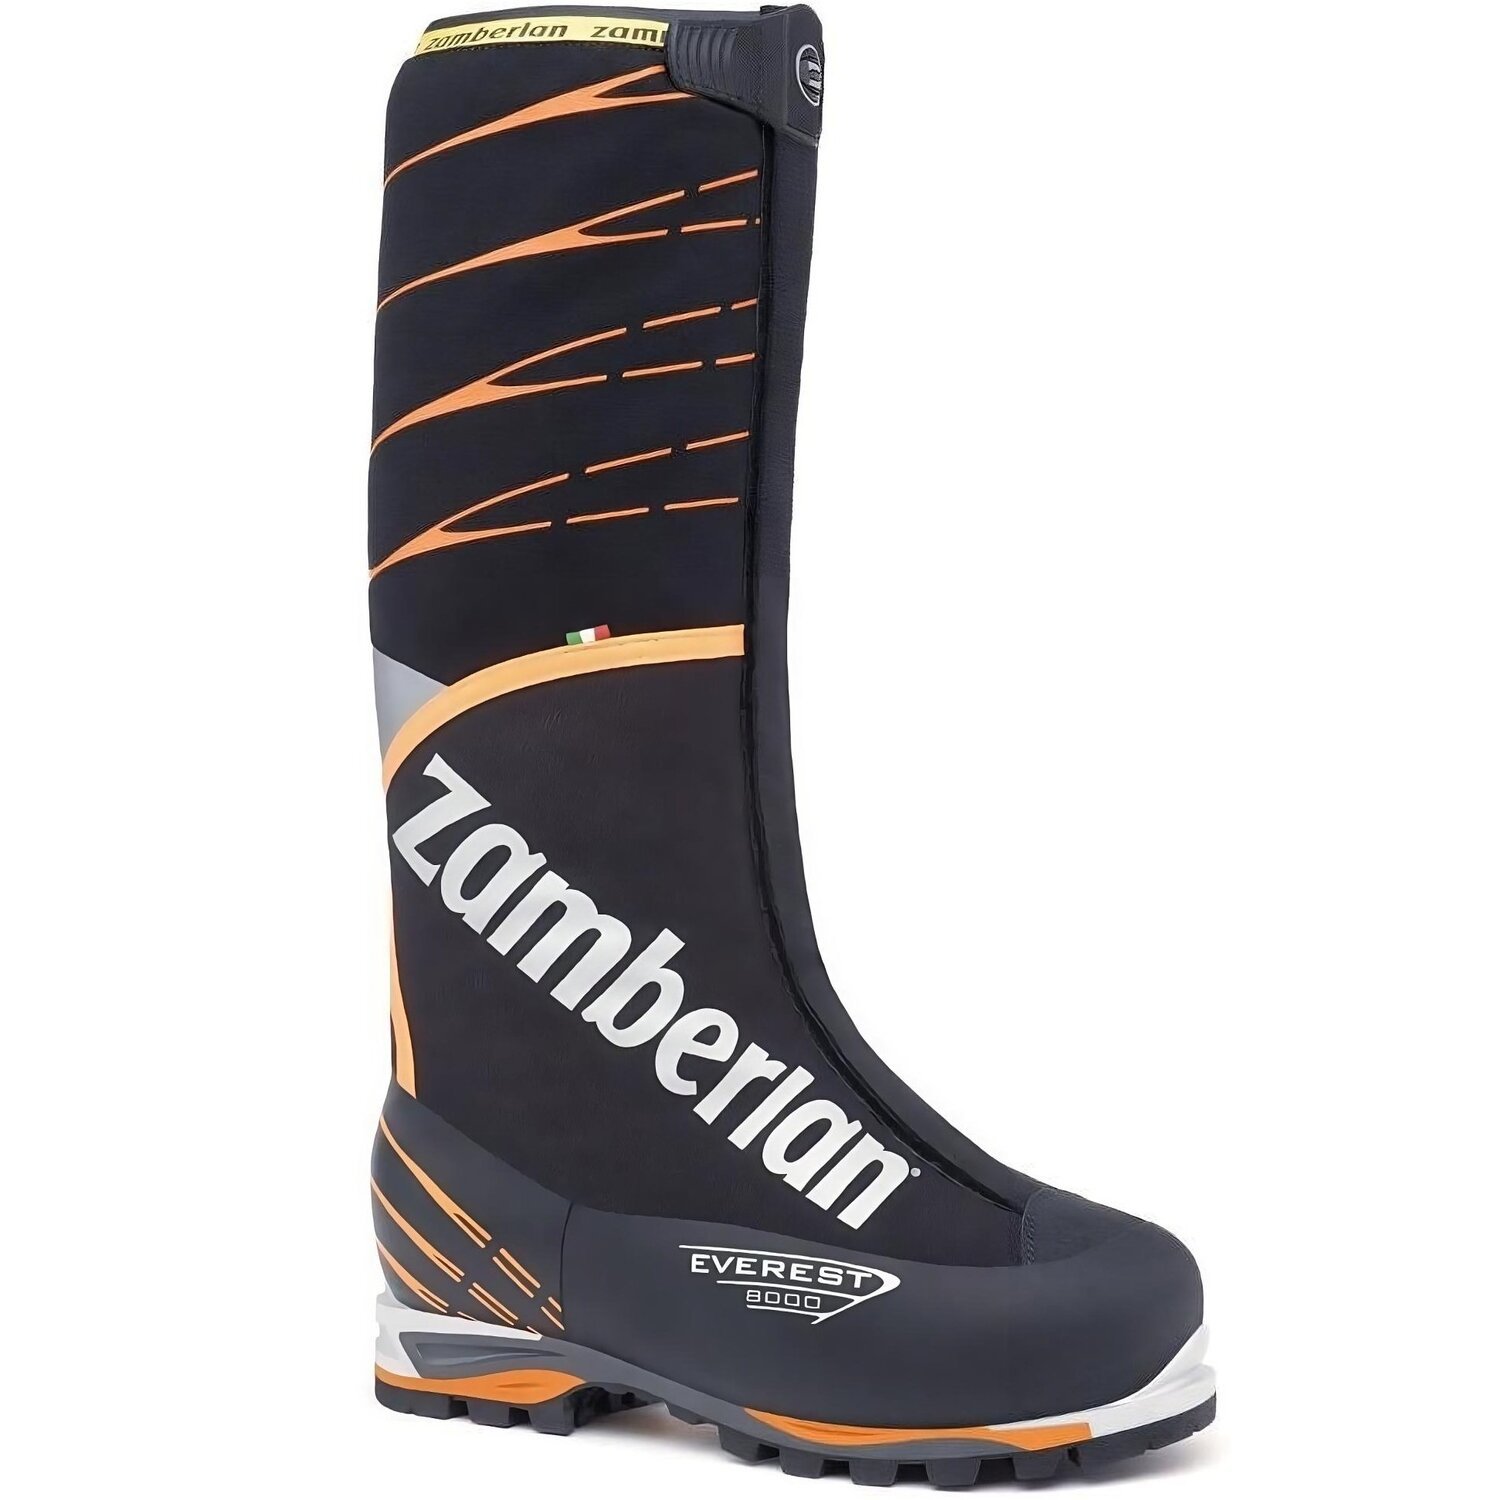 Ботинки Zamberlan 8000 Everest Evo RR black/orange 46 черный/оранжевый фото 